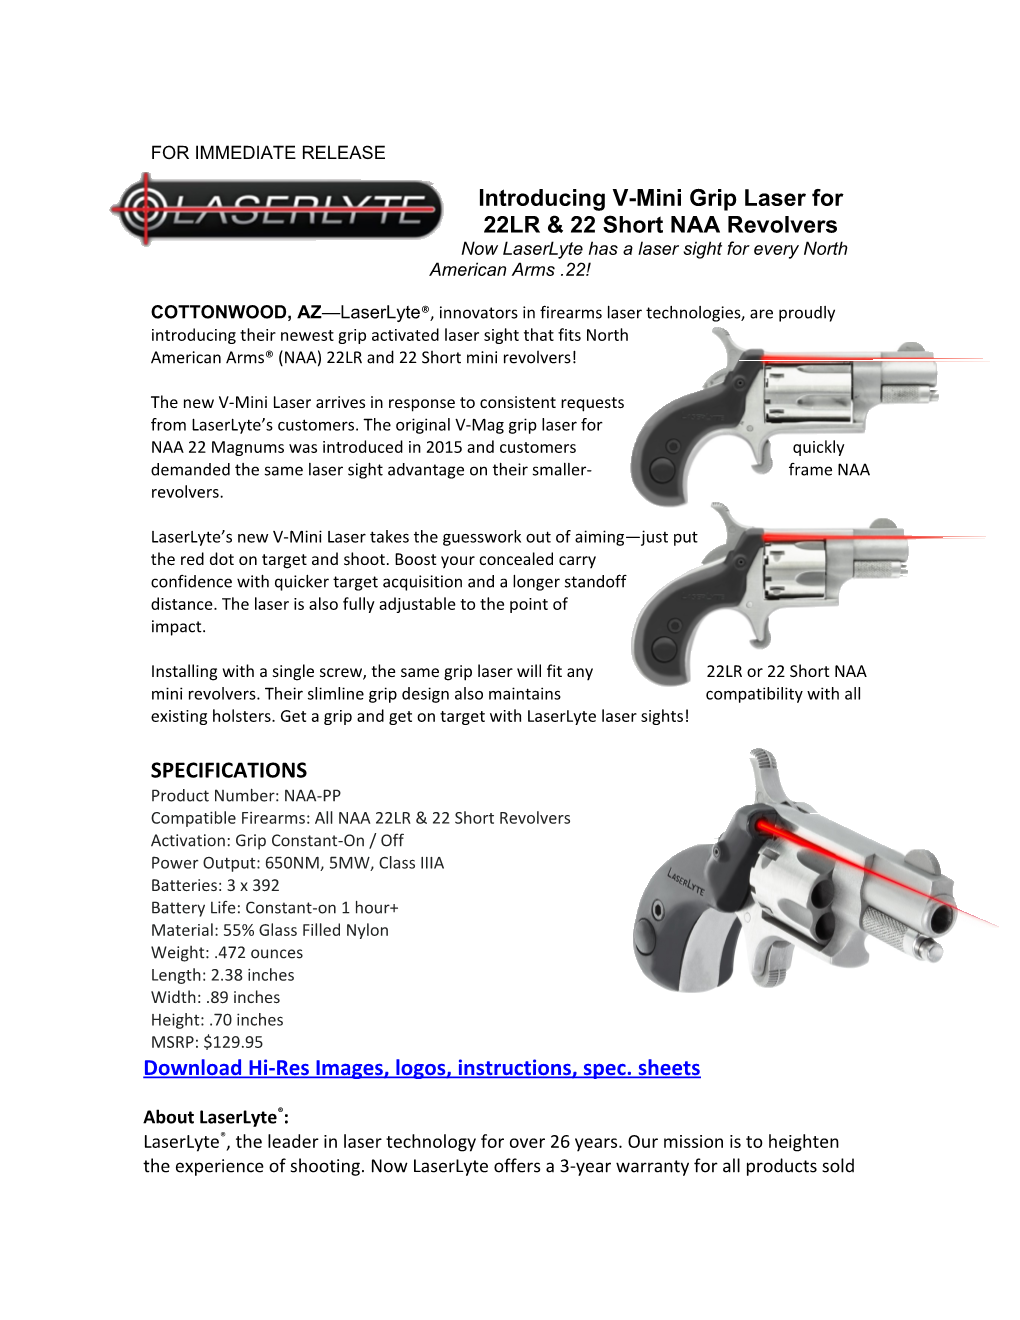 Introducing V-Mini Grip Laser for 22LR & 22 Short NAA Revolvers